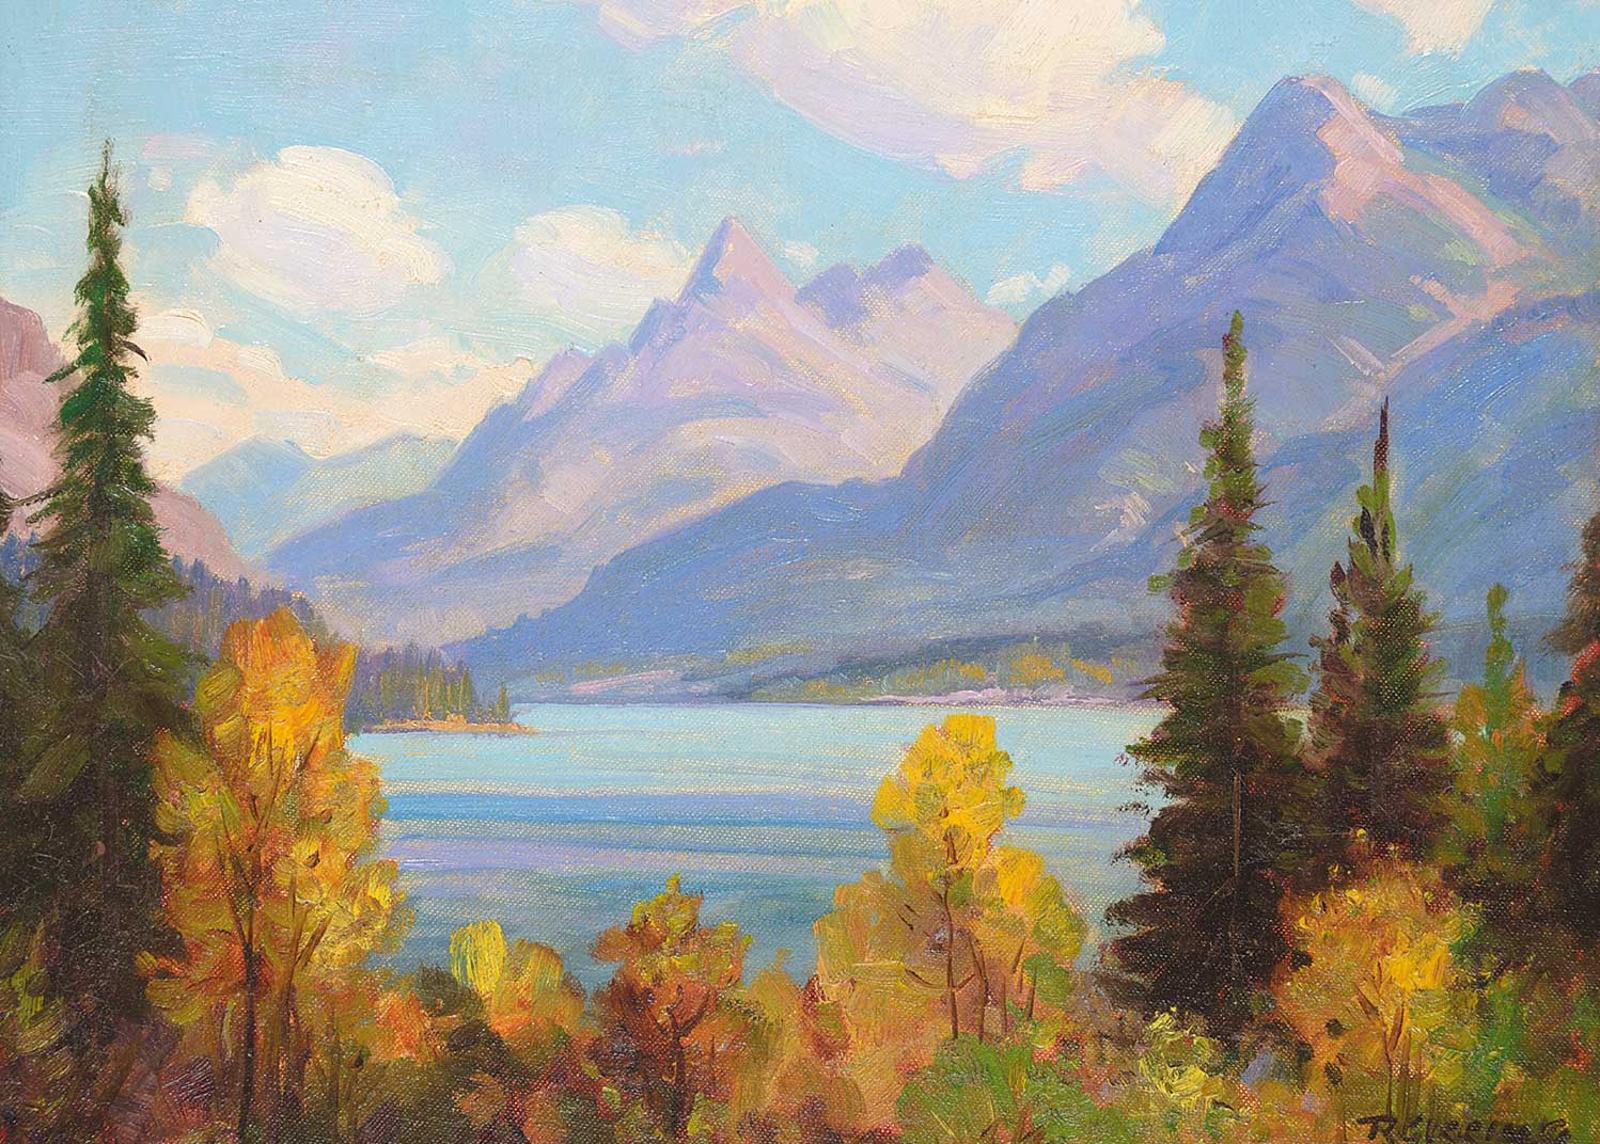 Roland Gissing (1895-1967) - Kootenay Lake